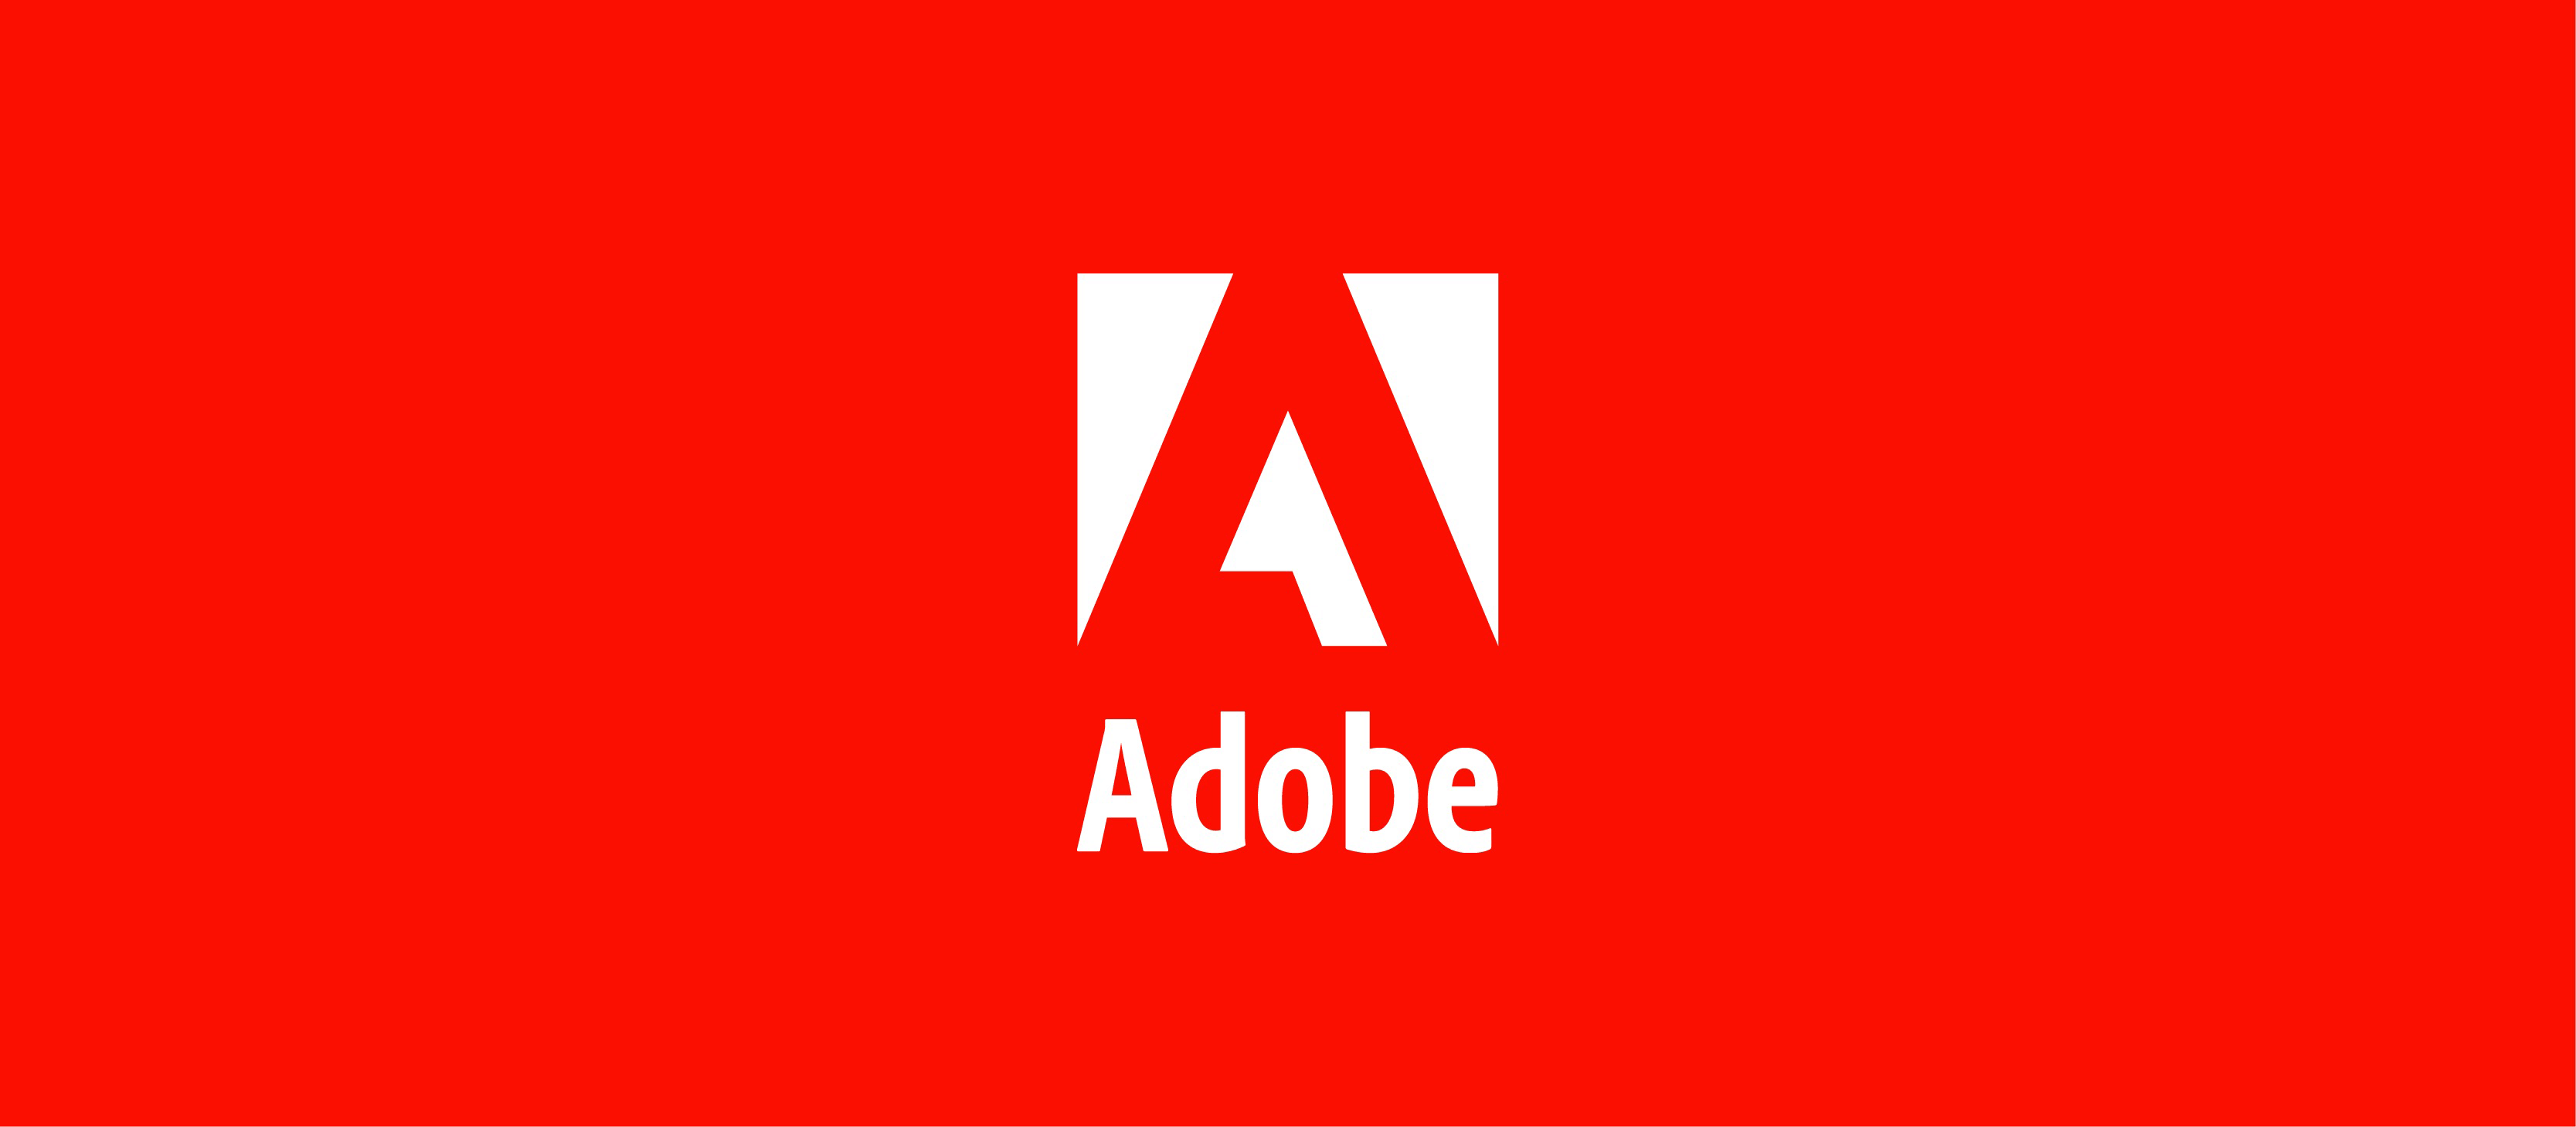 Adobe.png